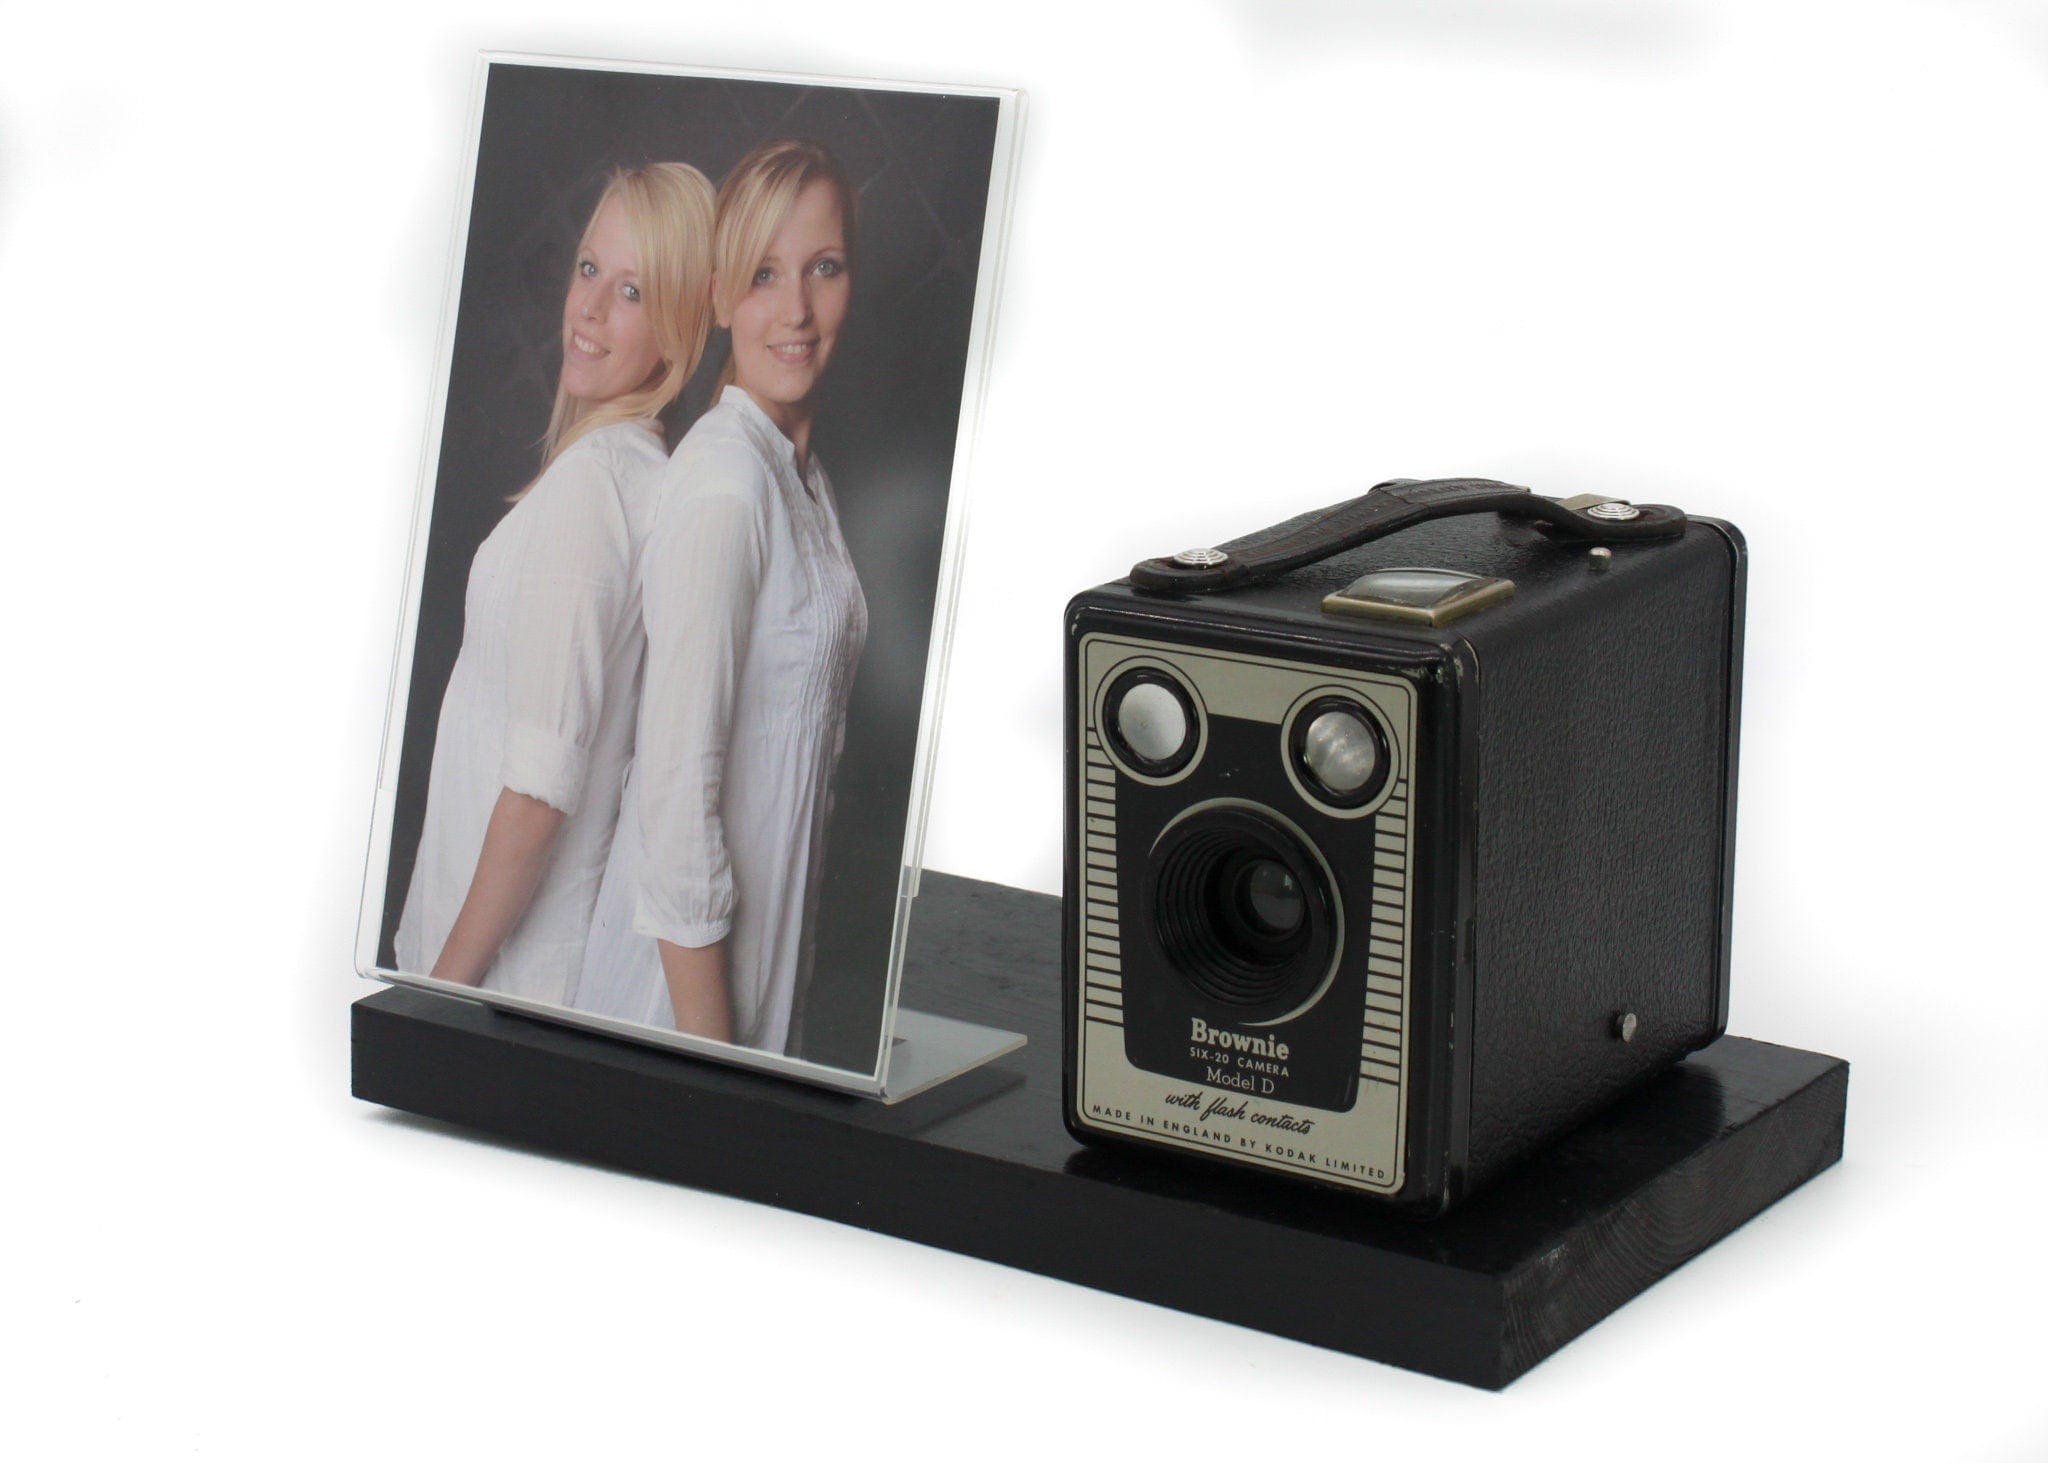 Vintage Camera Picture Frame - Kodak Brownie Six-20 Model D Camera